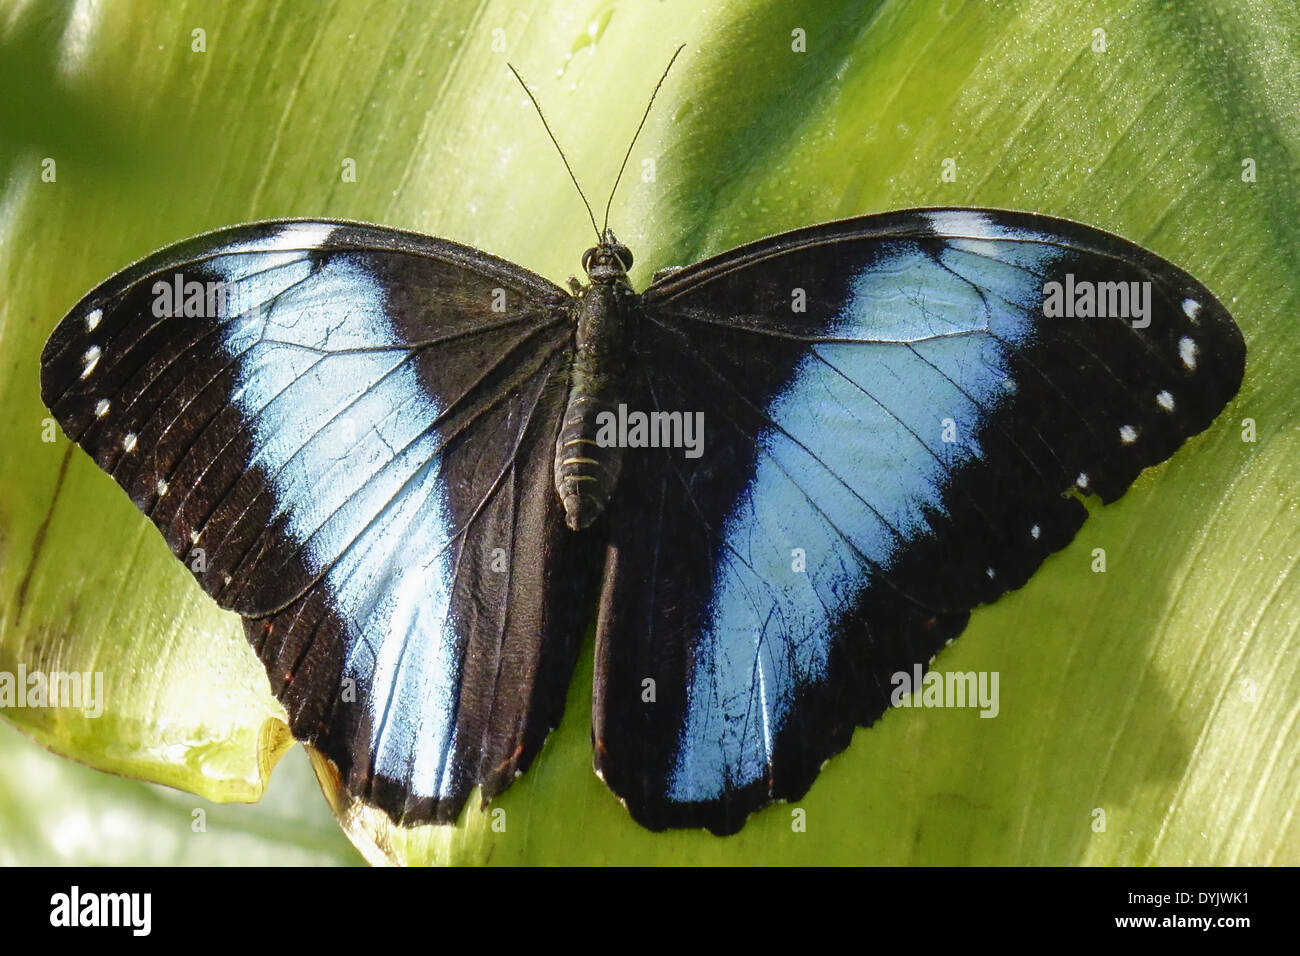 Tropischer Schmetterling, Blauer Morphofalter (Morpho peleides) Stock Photo